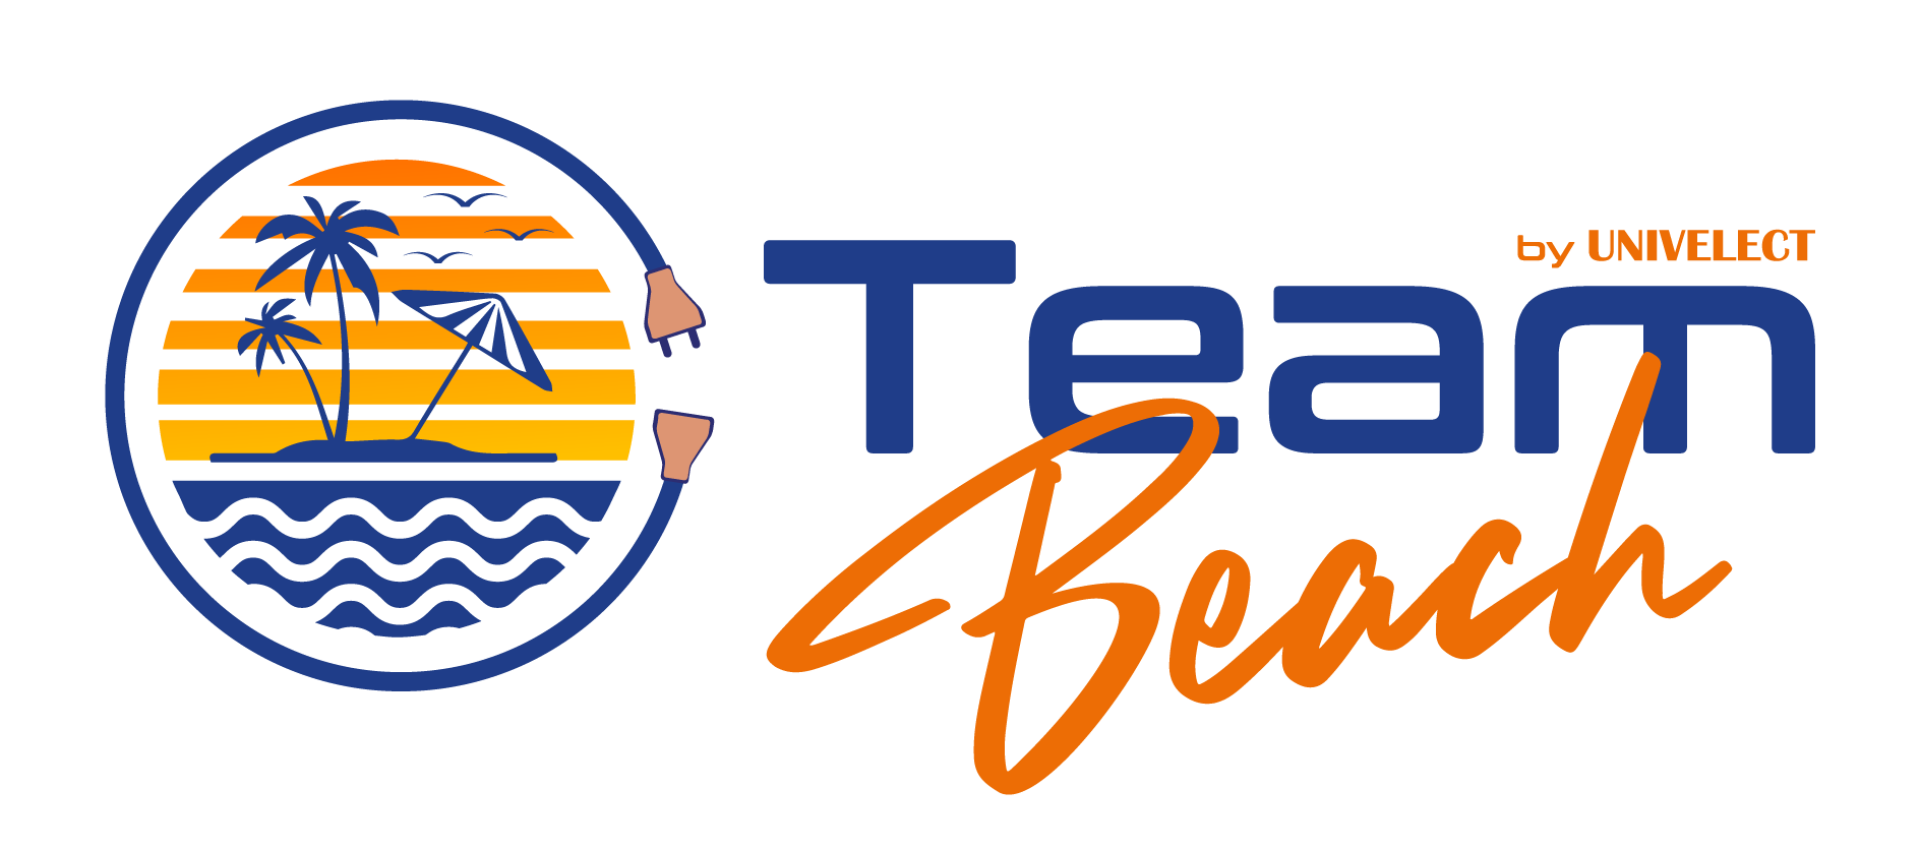 UNIVELECT - Team beach - logo_Plan de travail 1